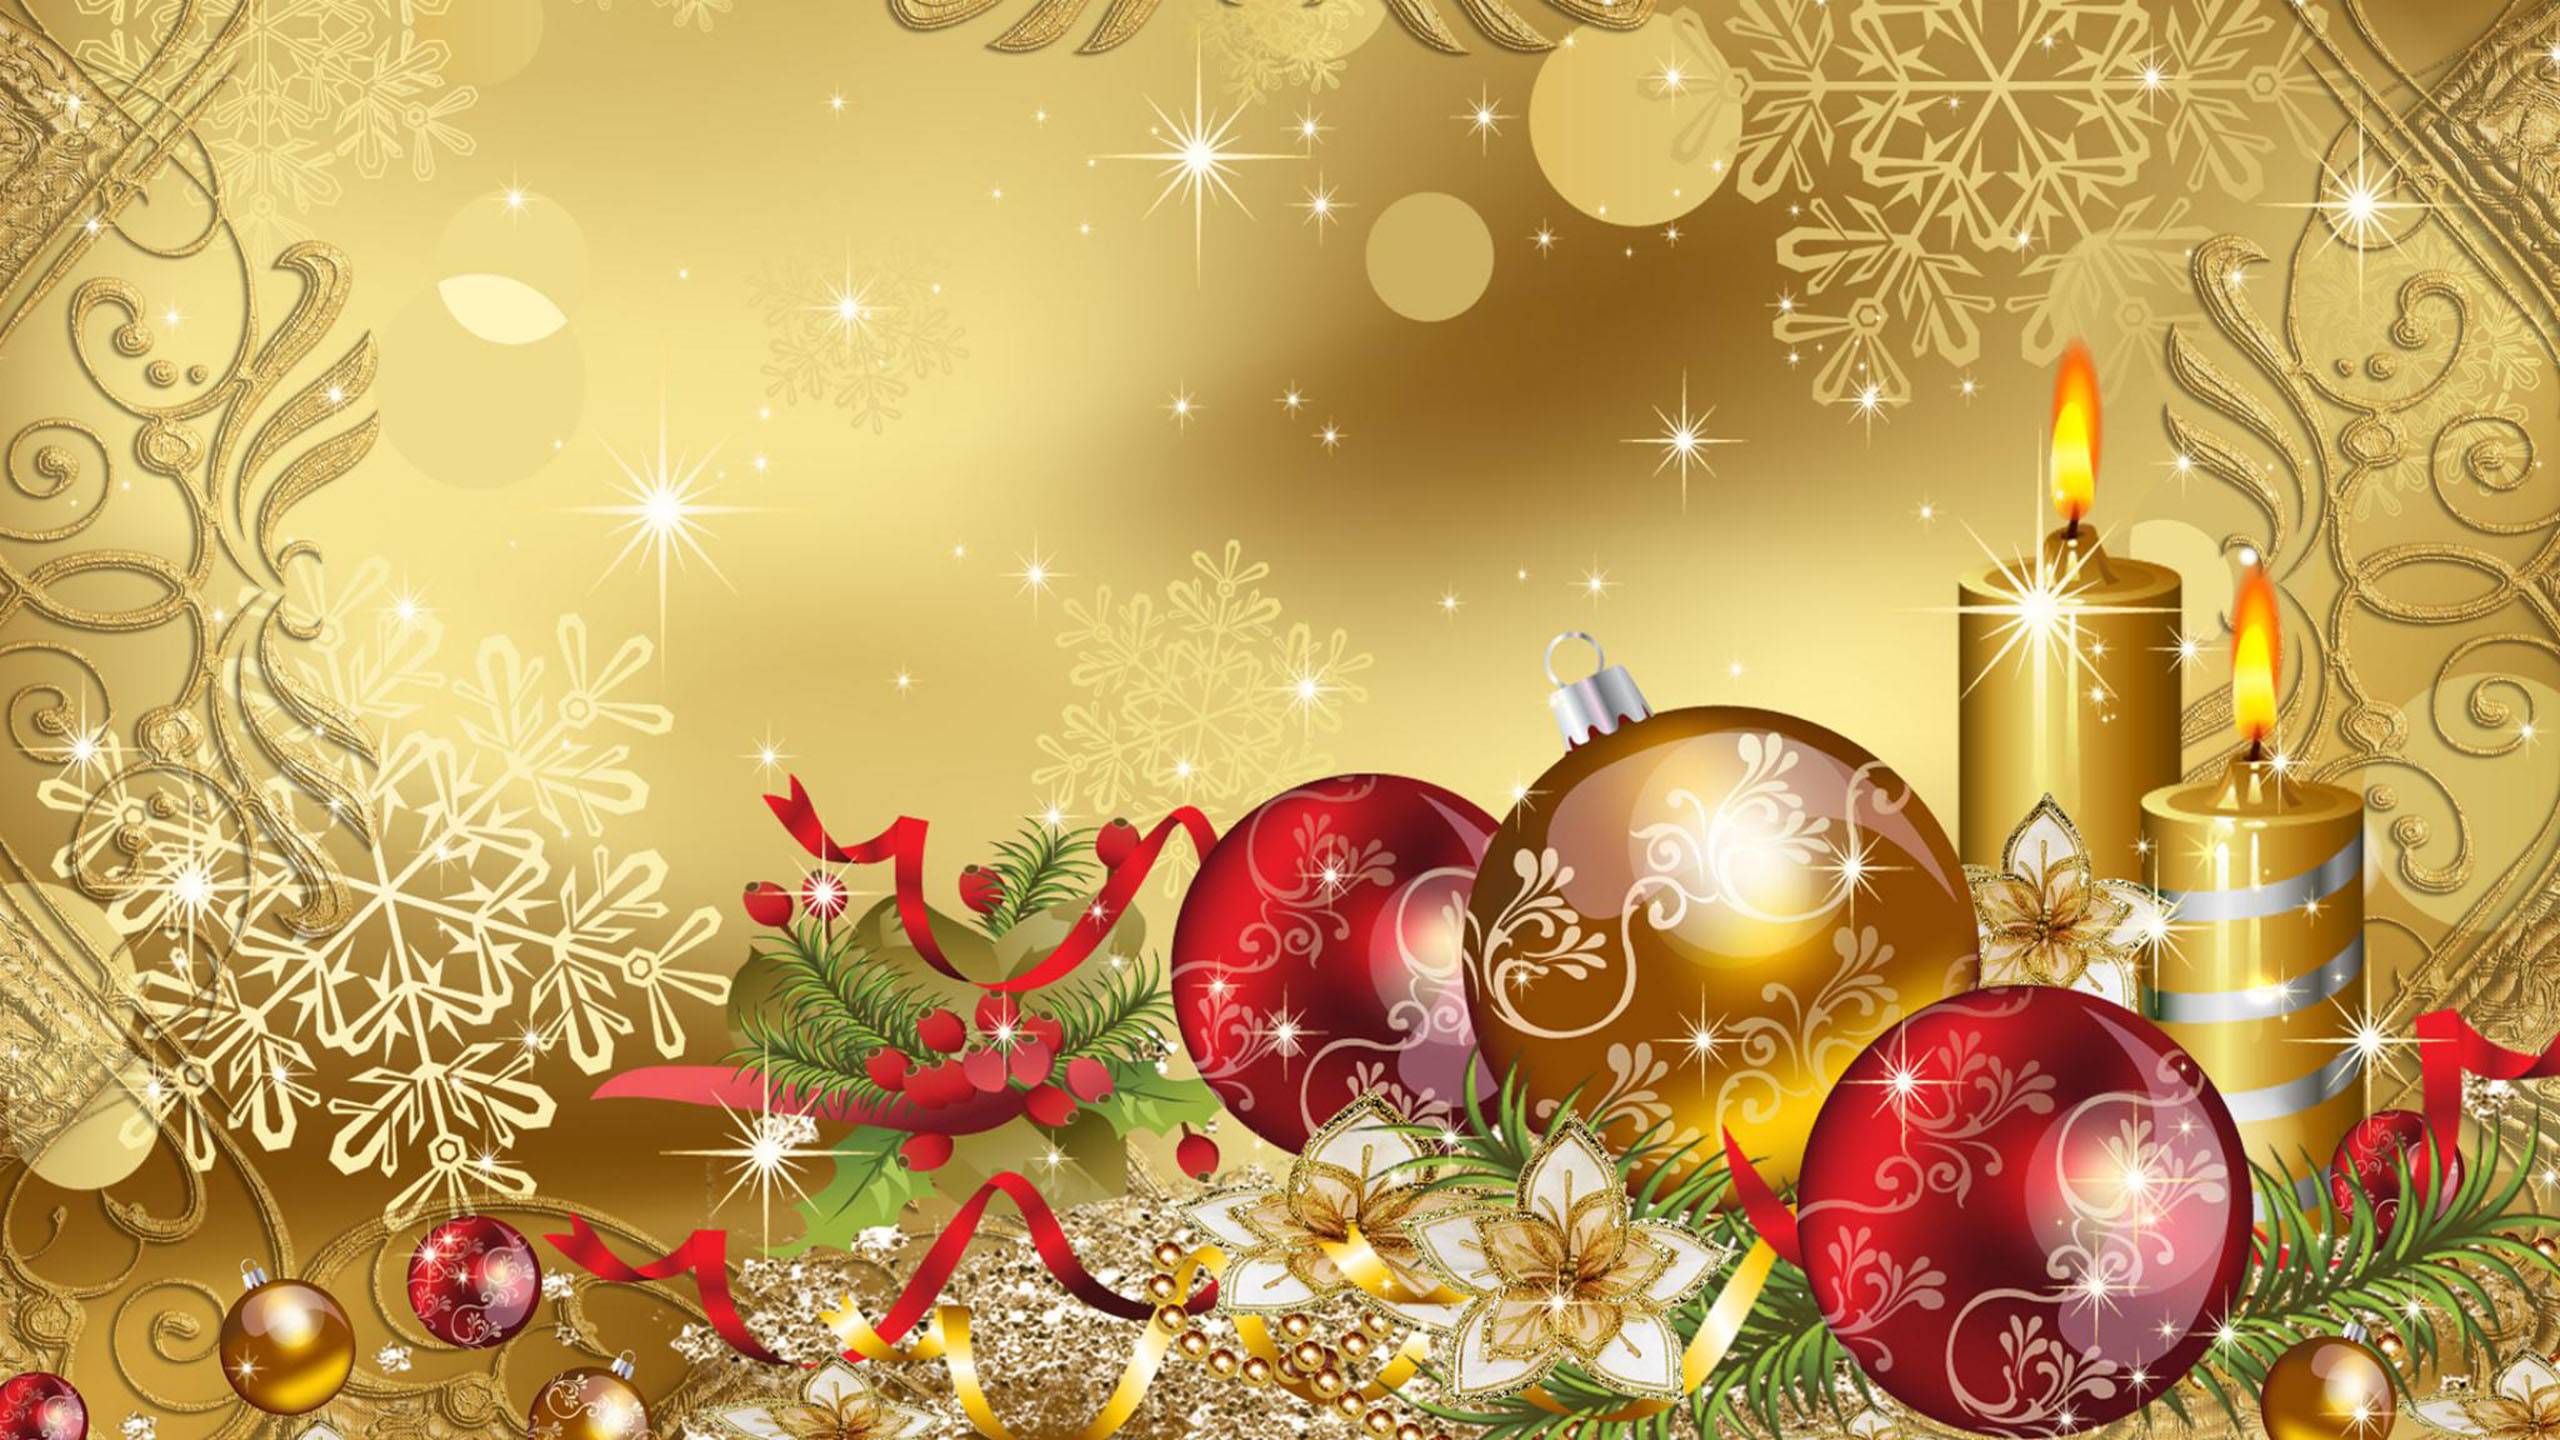 Merry Christmas Gold Wallpaper Hd For Desktop 2560x1440 : Wallpapers13.com